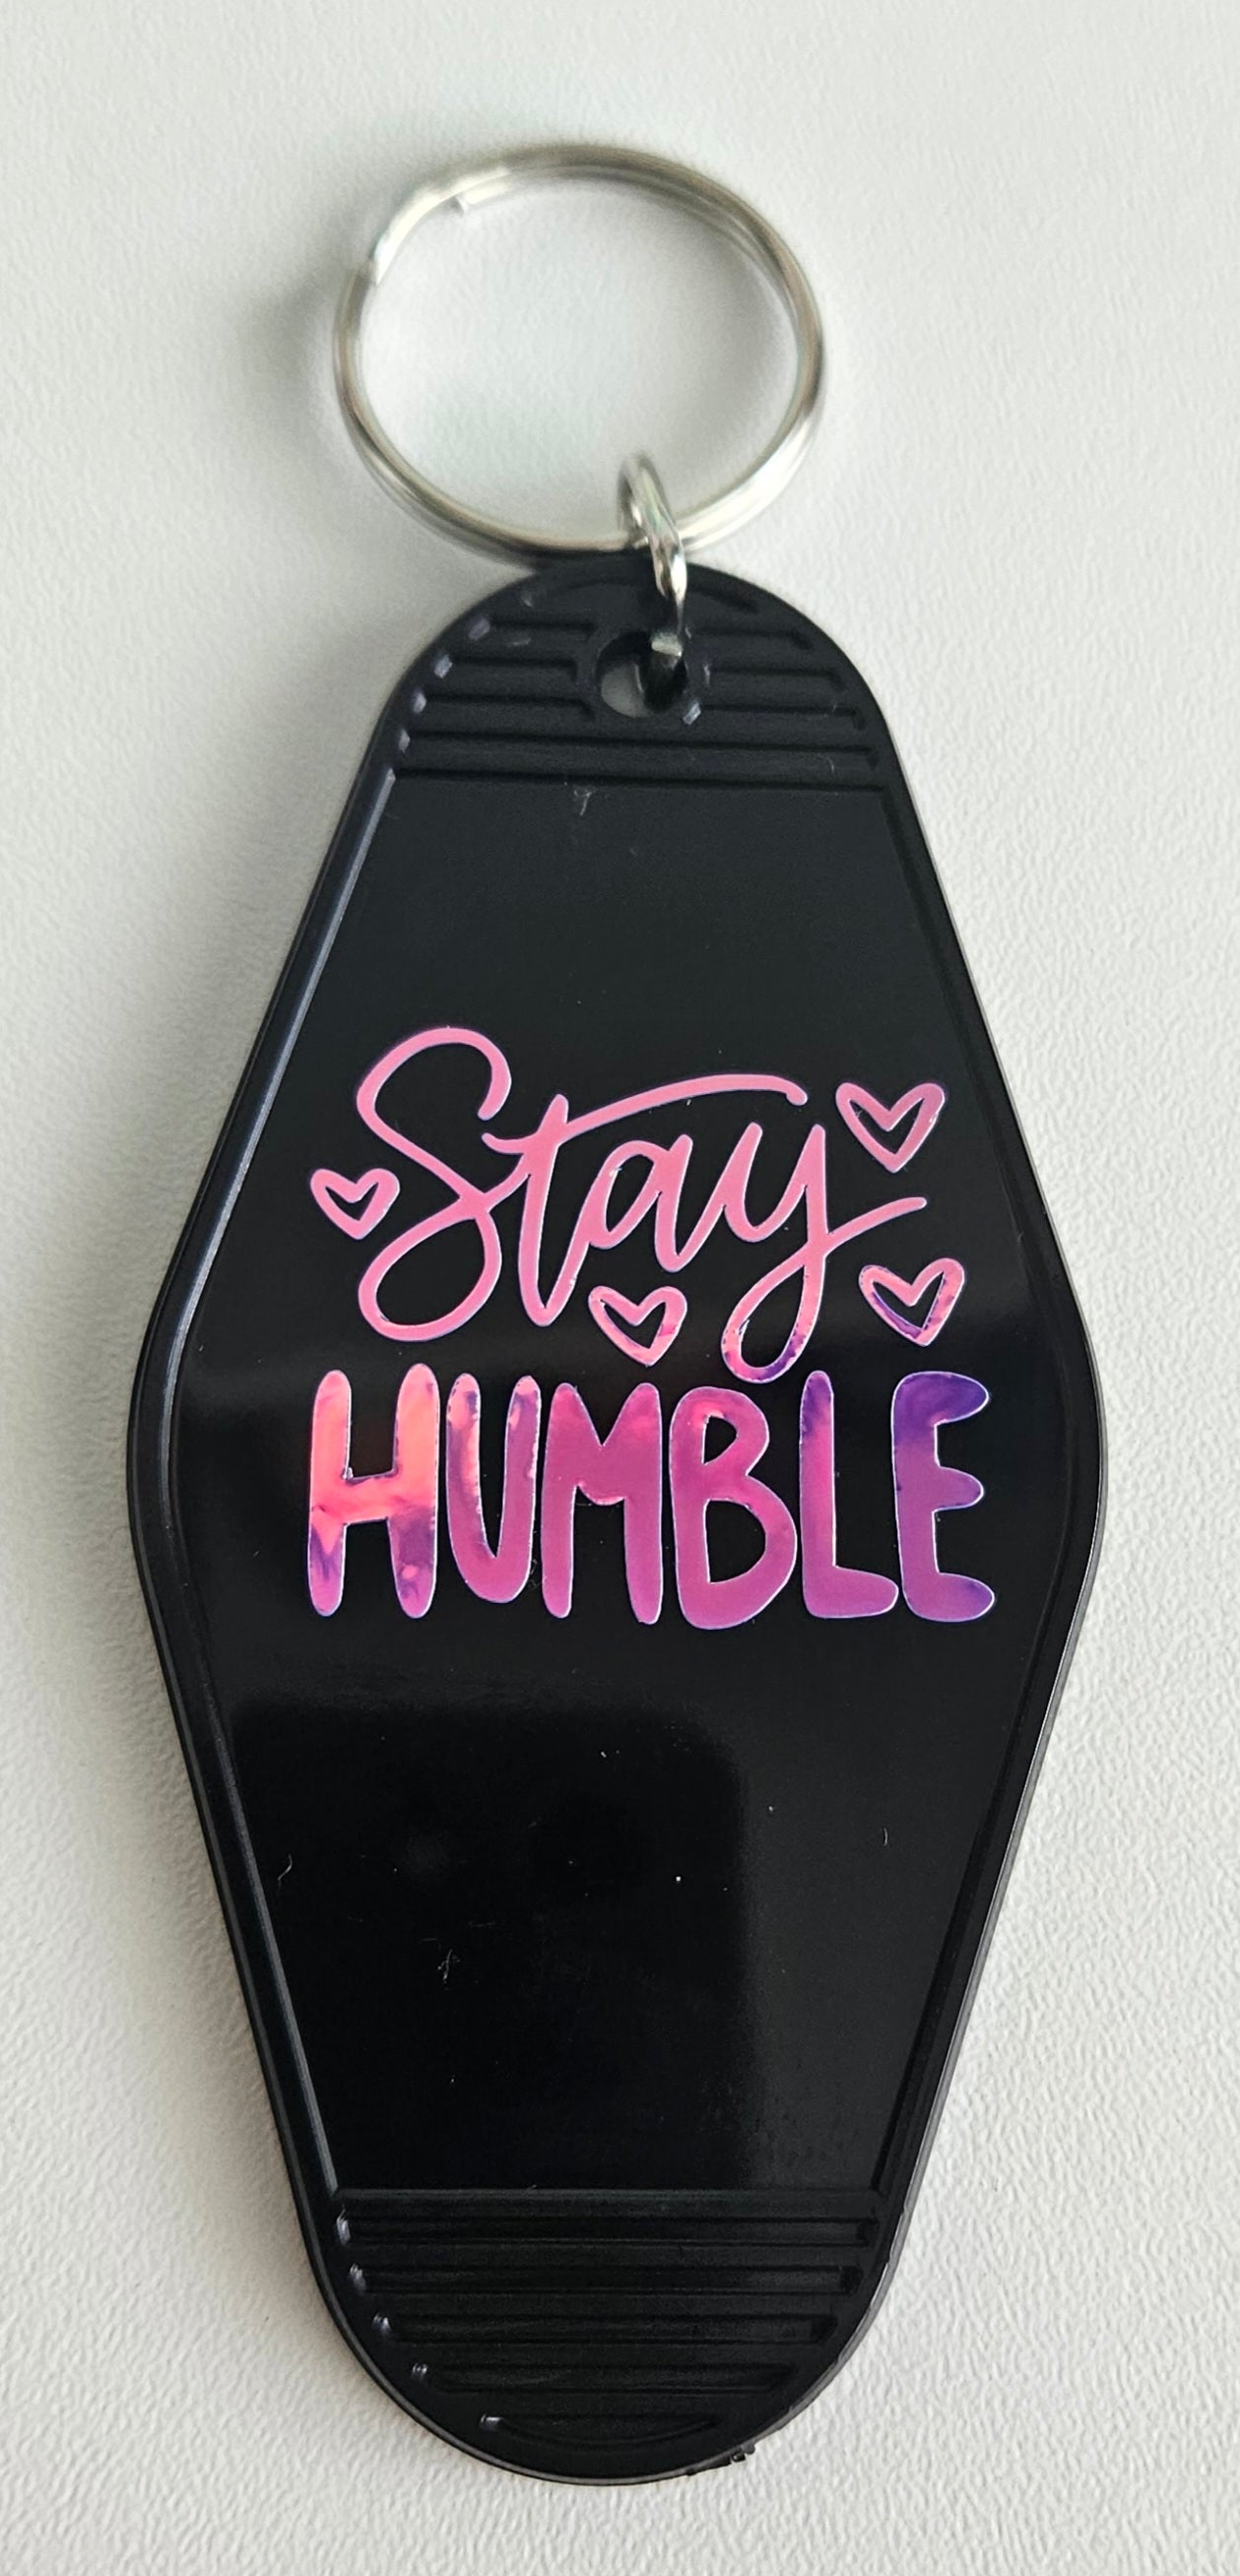 'Stay Humble' keyring